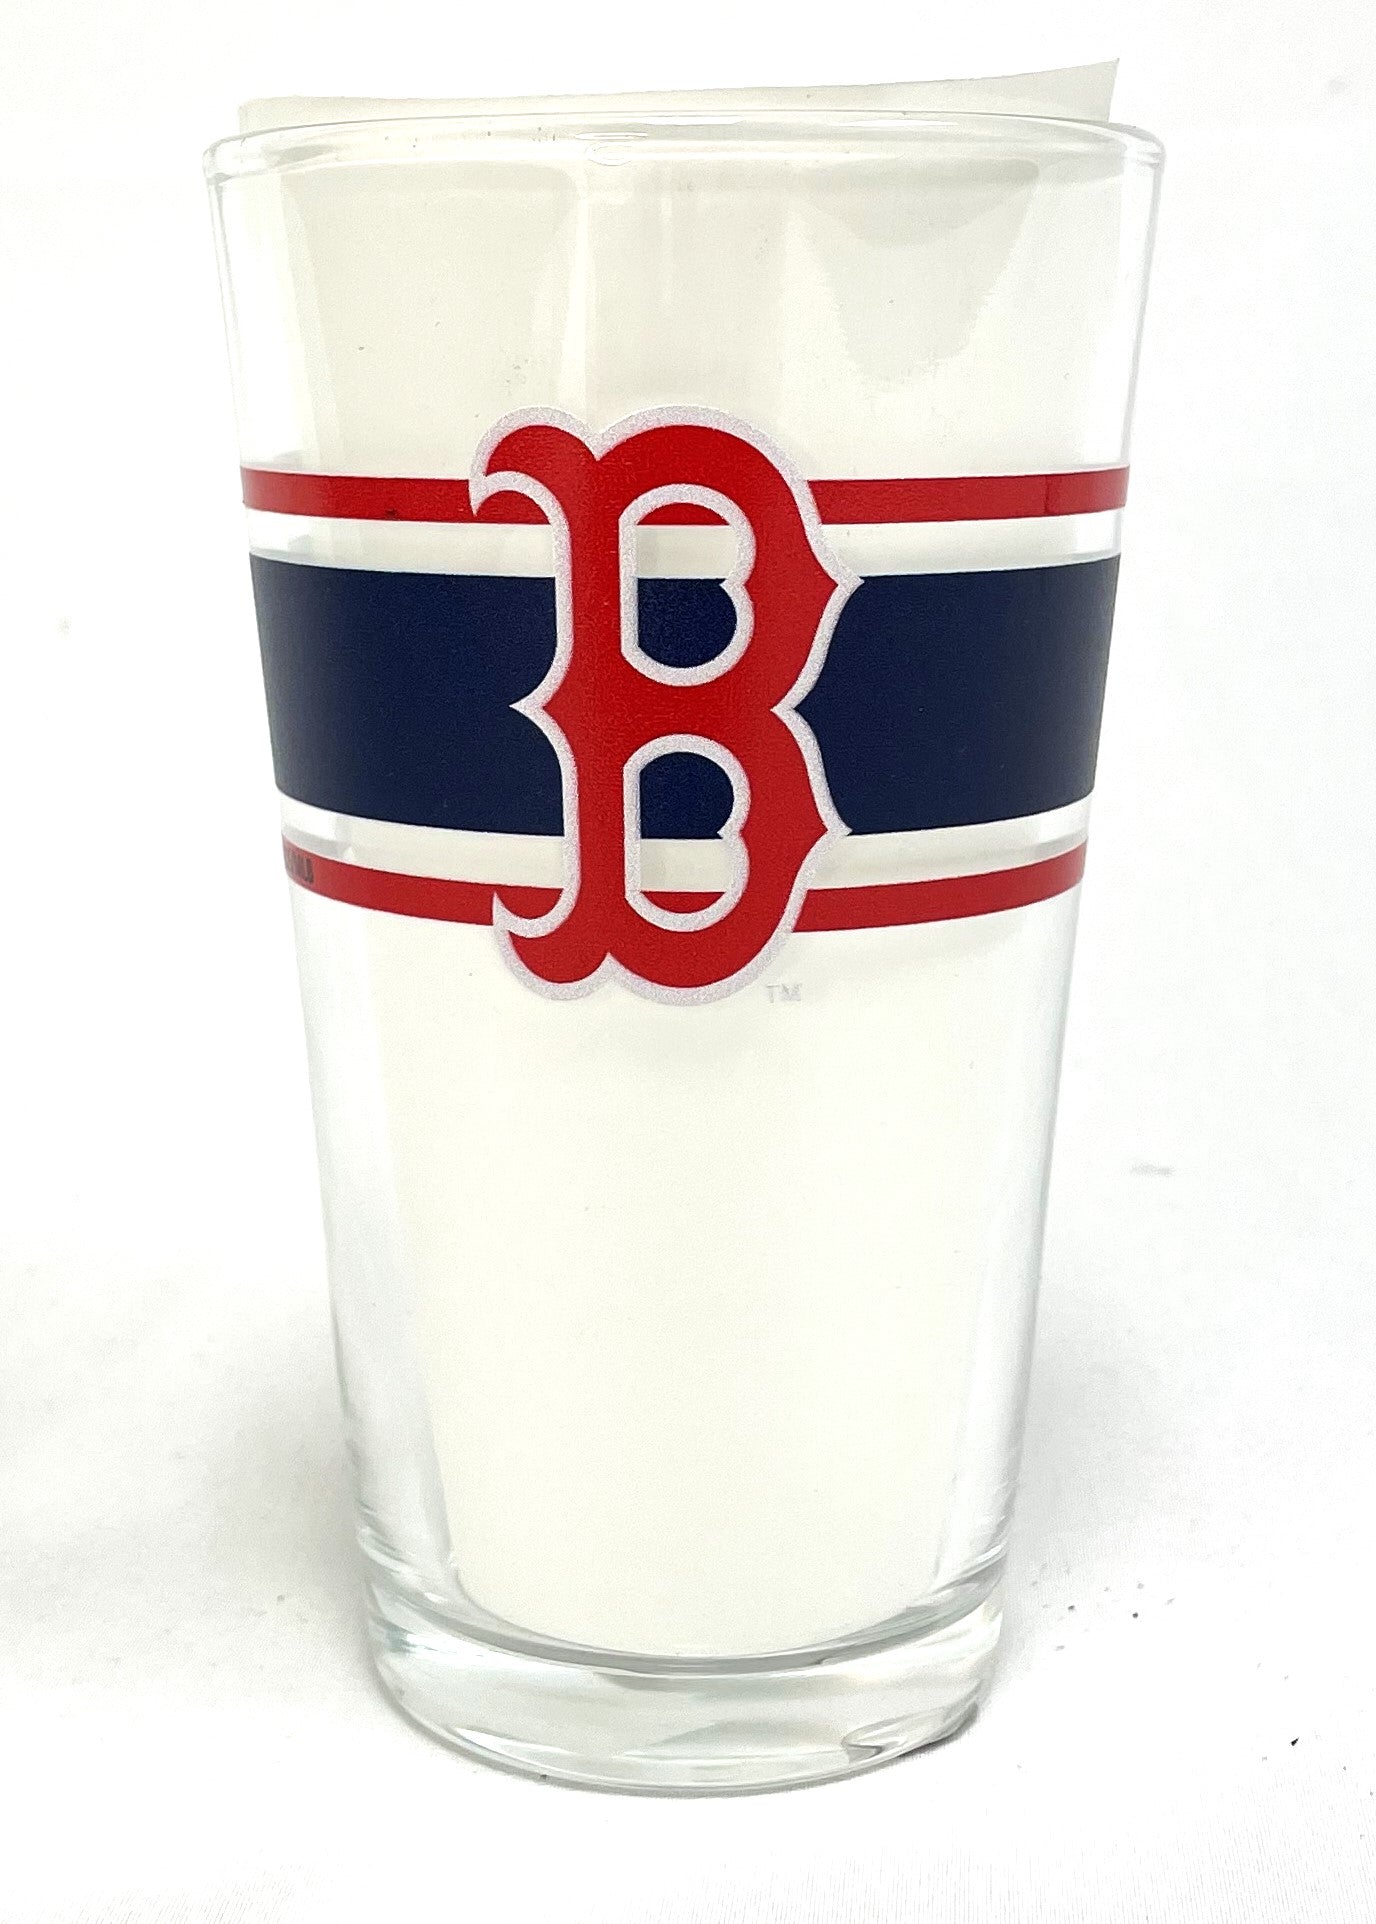 Boston Red Sox Striped Glass